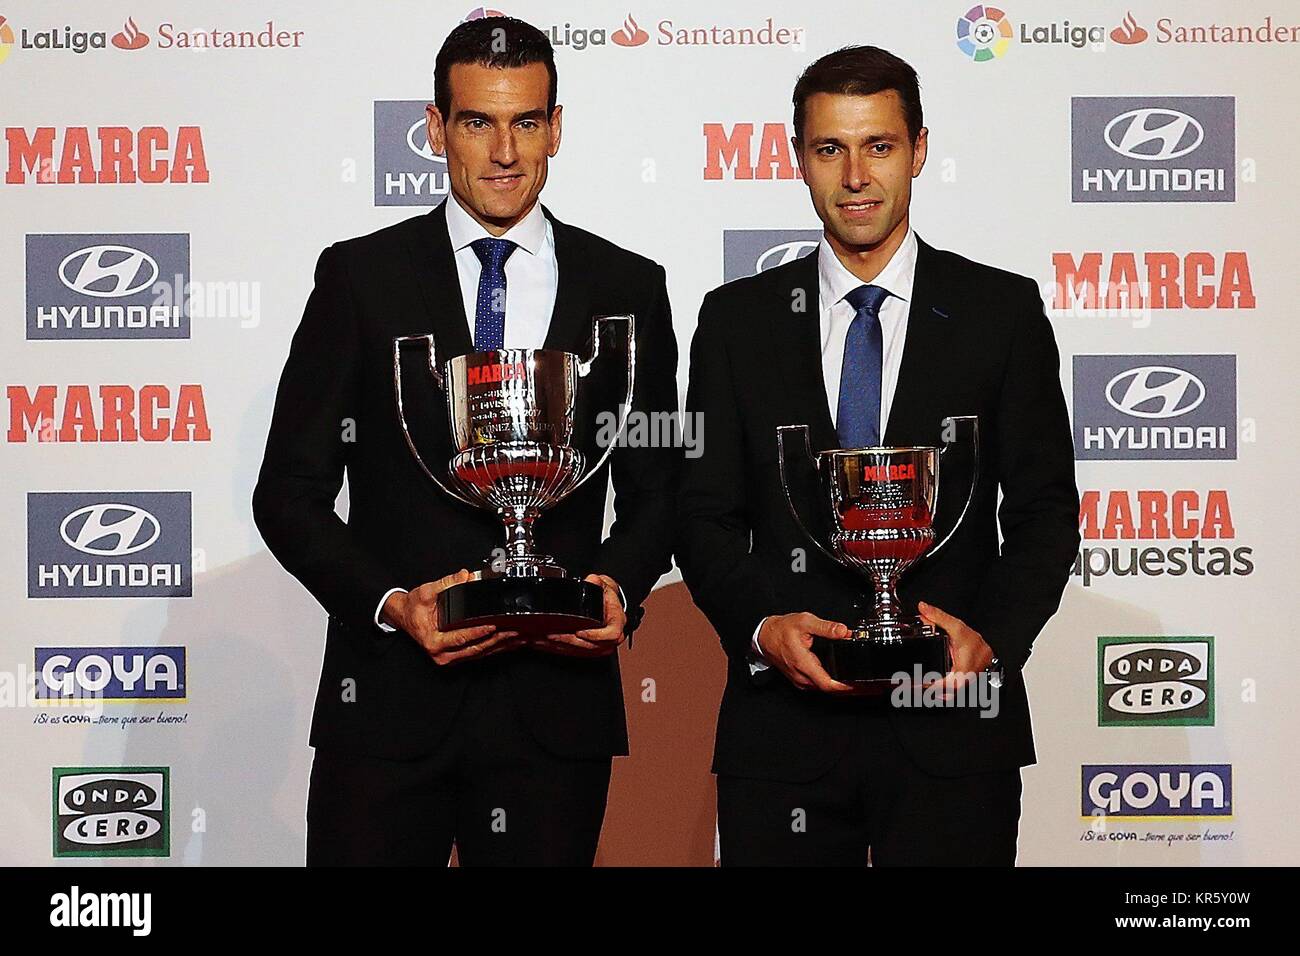 Spanish referees Juan Martinez Munuera (L) and Adrian Cordero Vega (R) pose  with the Guruceta Award to the best referees in La Liga and La Liga 123  (Spanish Second Division) during 2016-2017